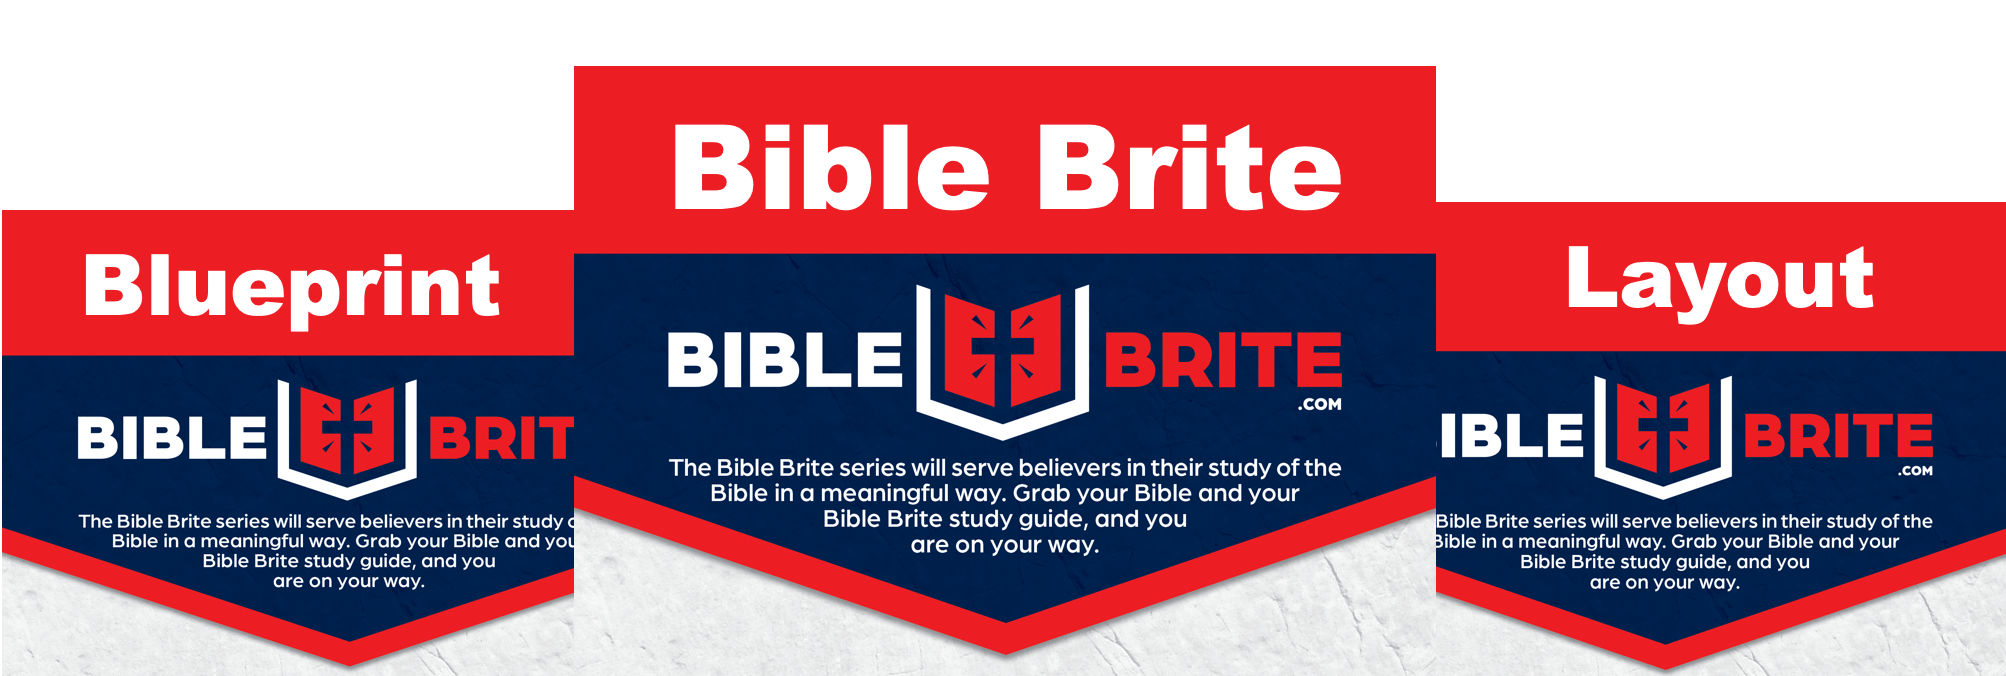 Bible Brite